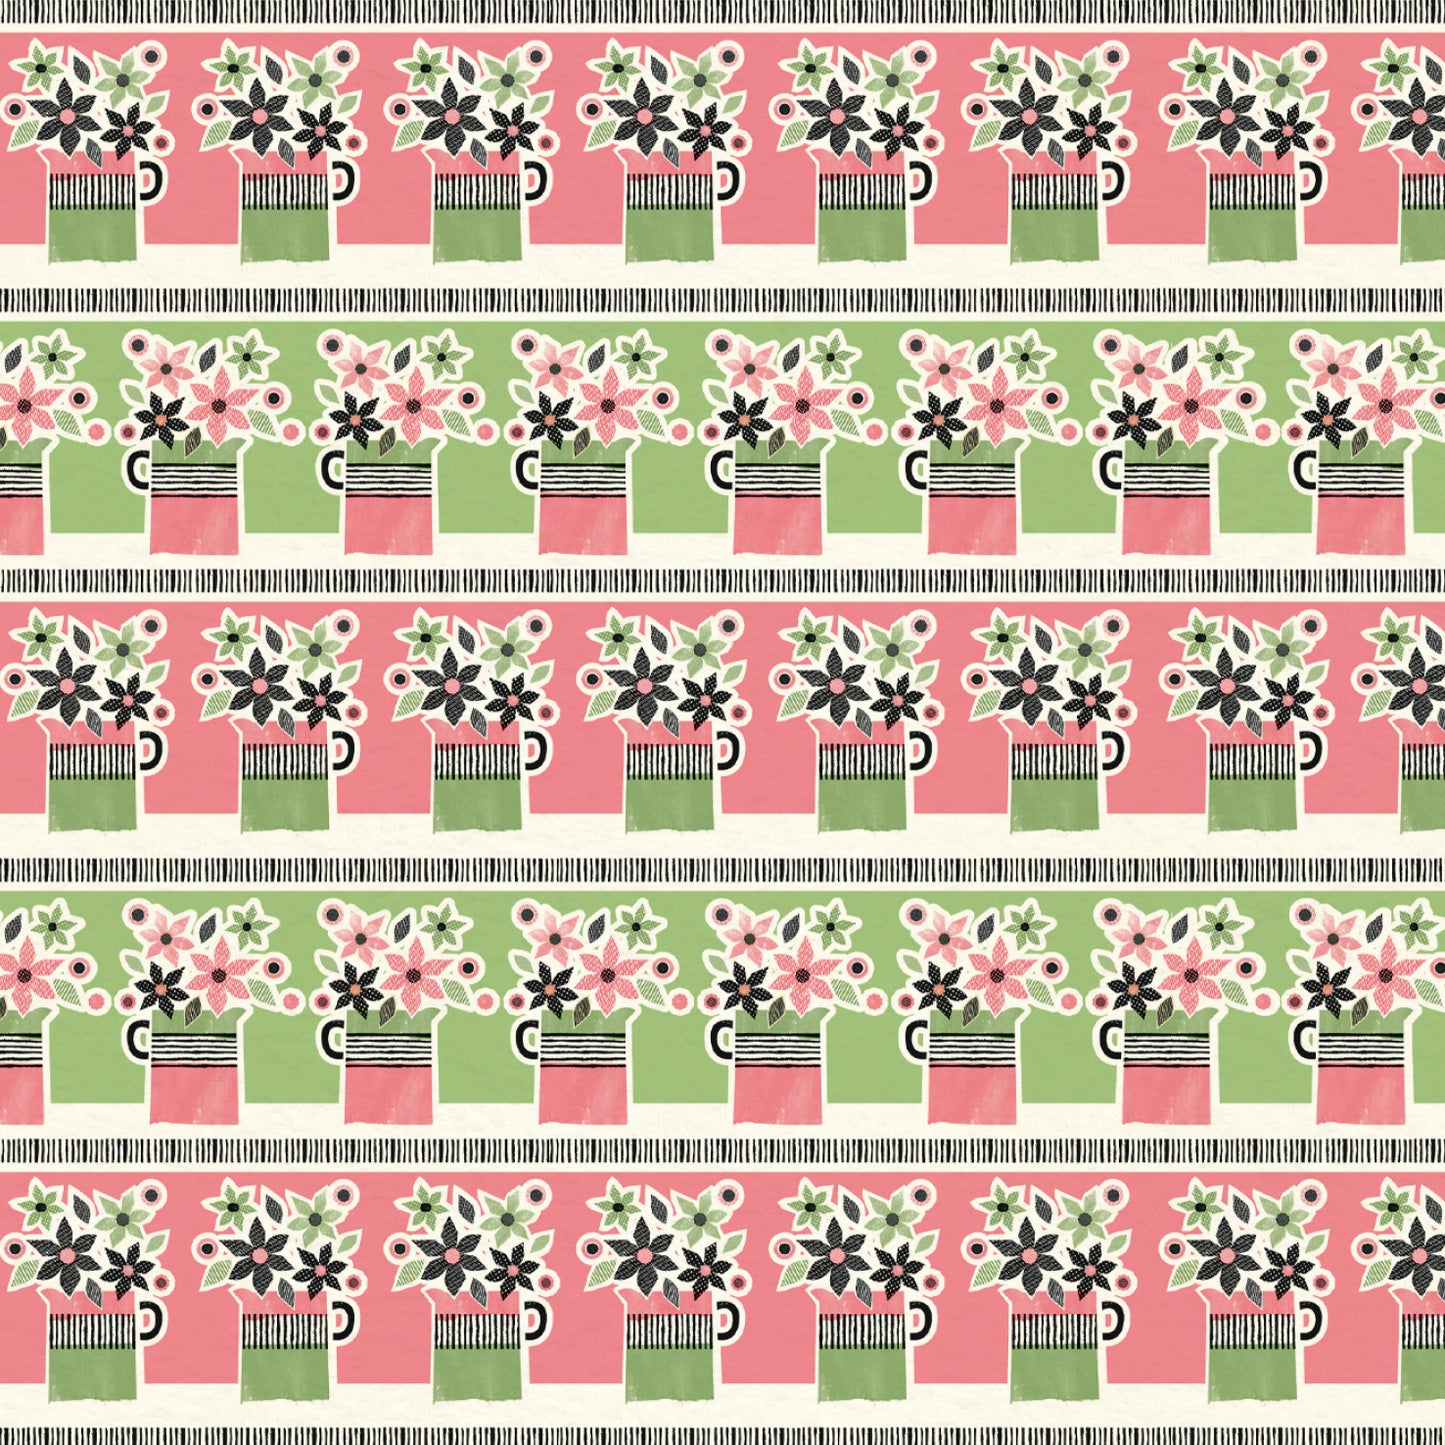 Just Patterns: Flower Jugs, Pink